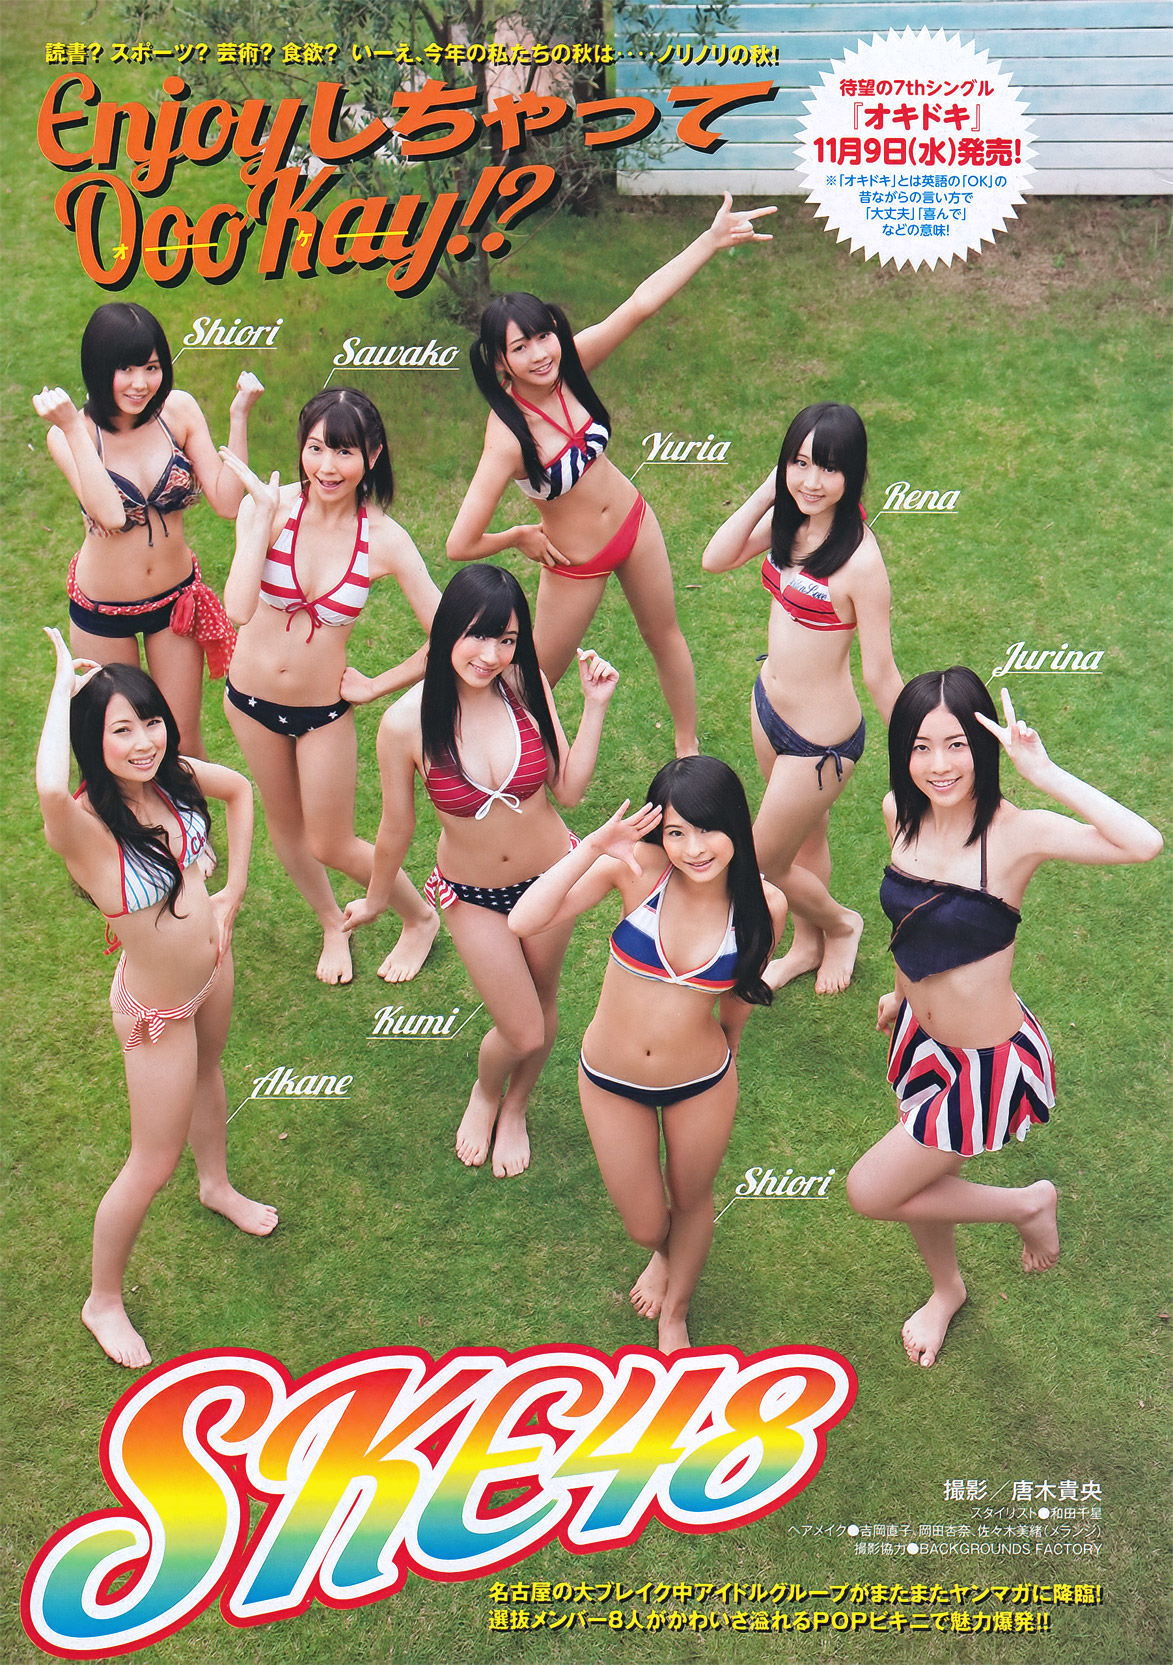 [Young Magazine]姐妹花:SKE48无圣光私房照片在线浏览(17P)